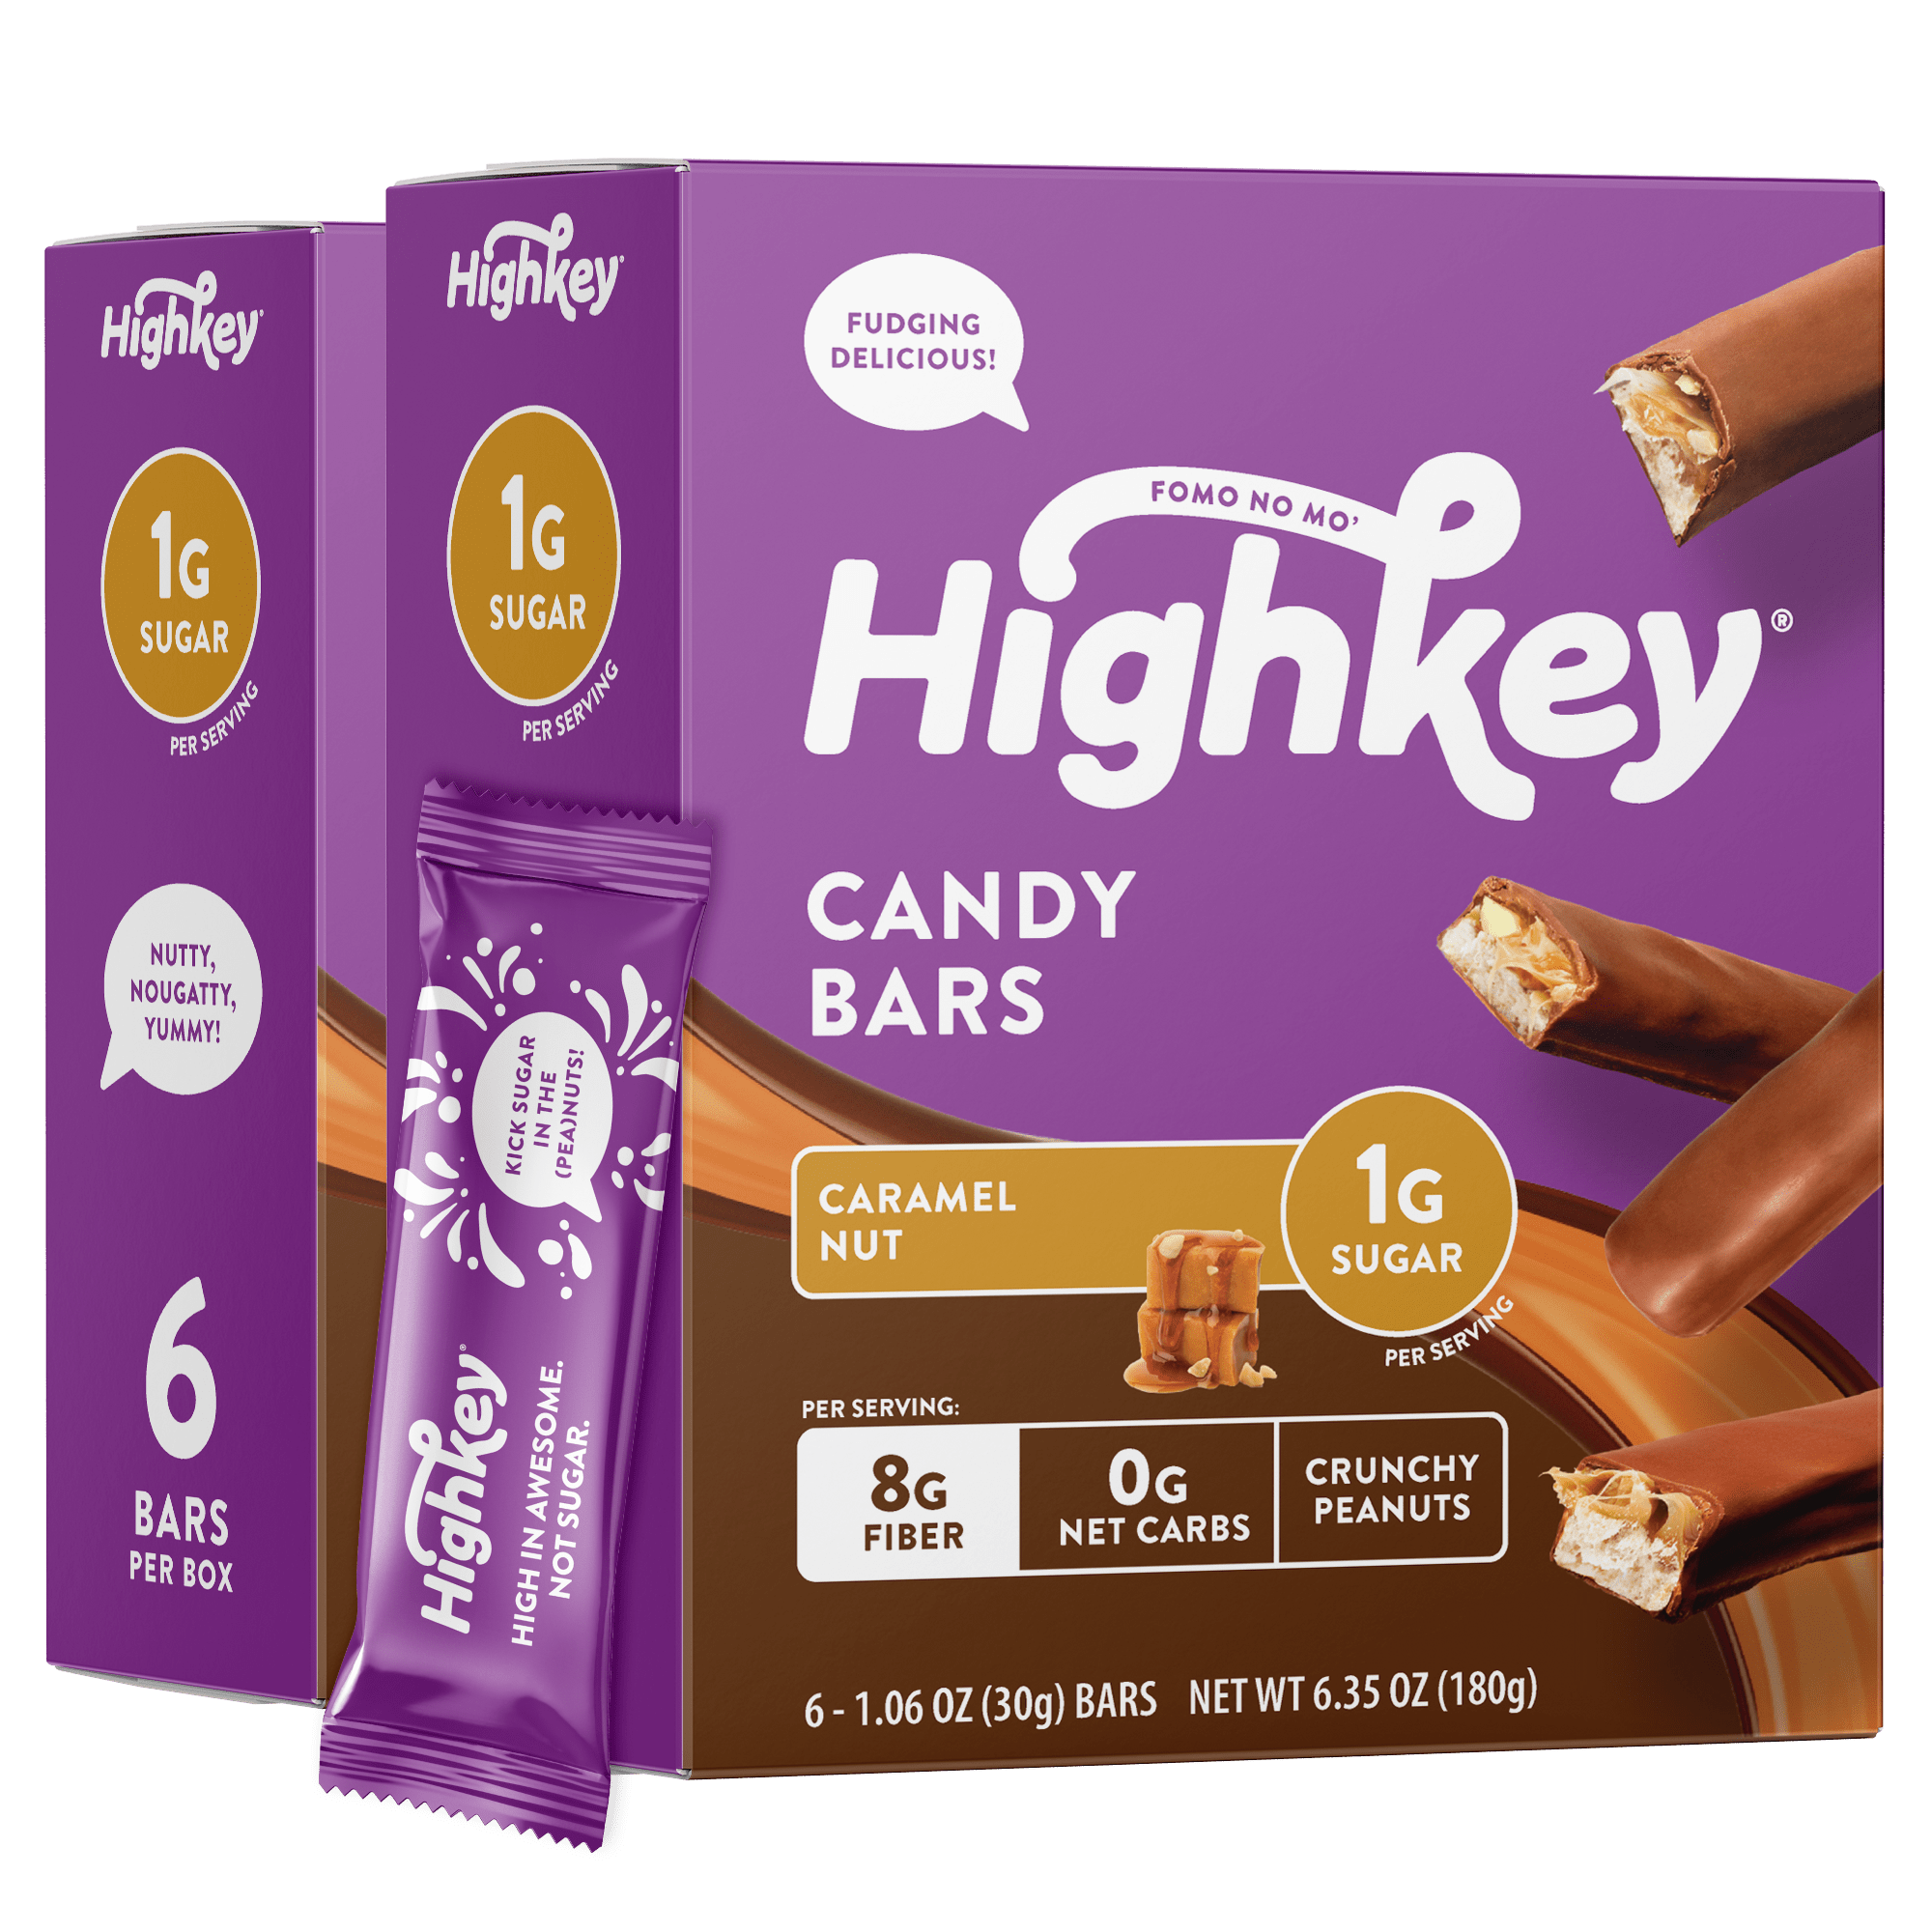 Candy Bars: Caramel Nut 12ct